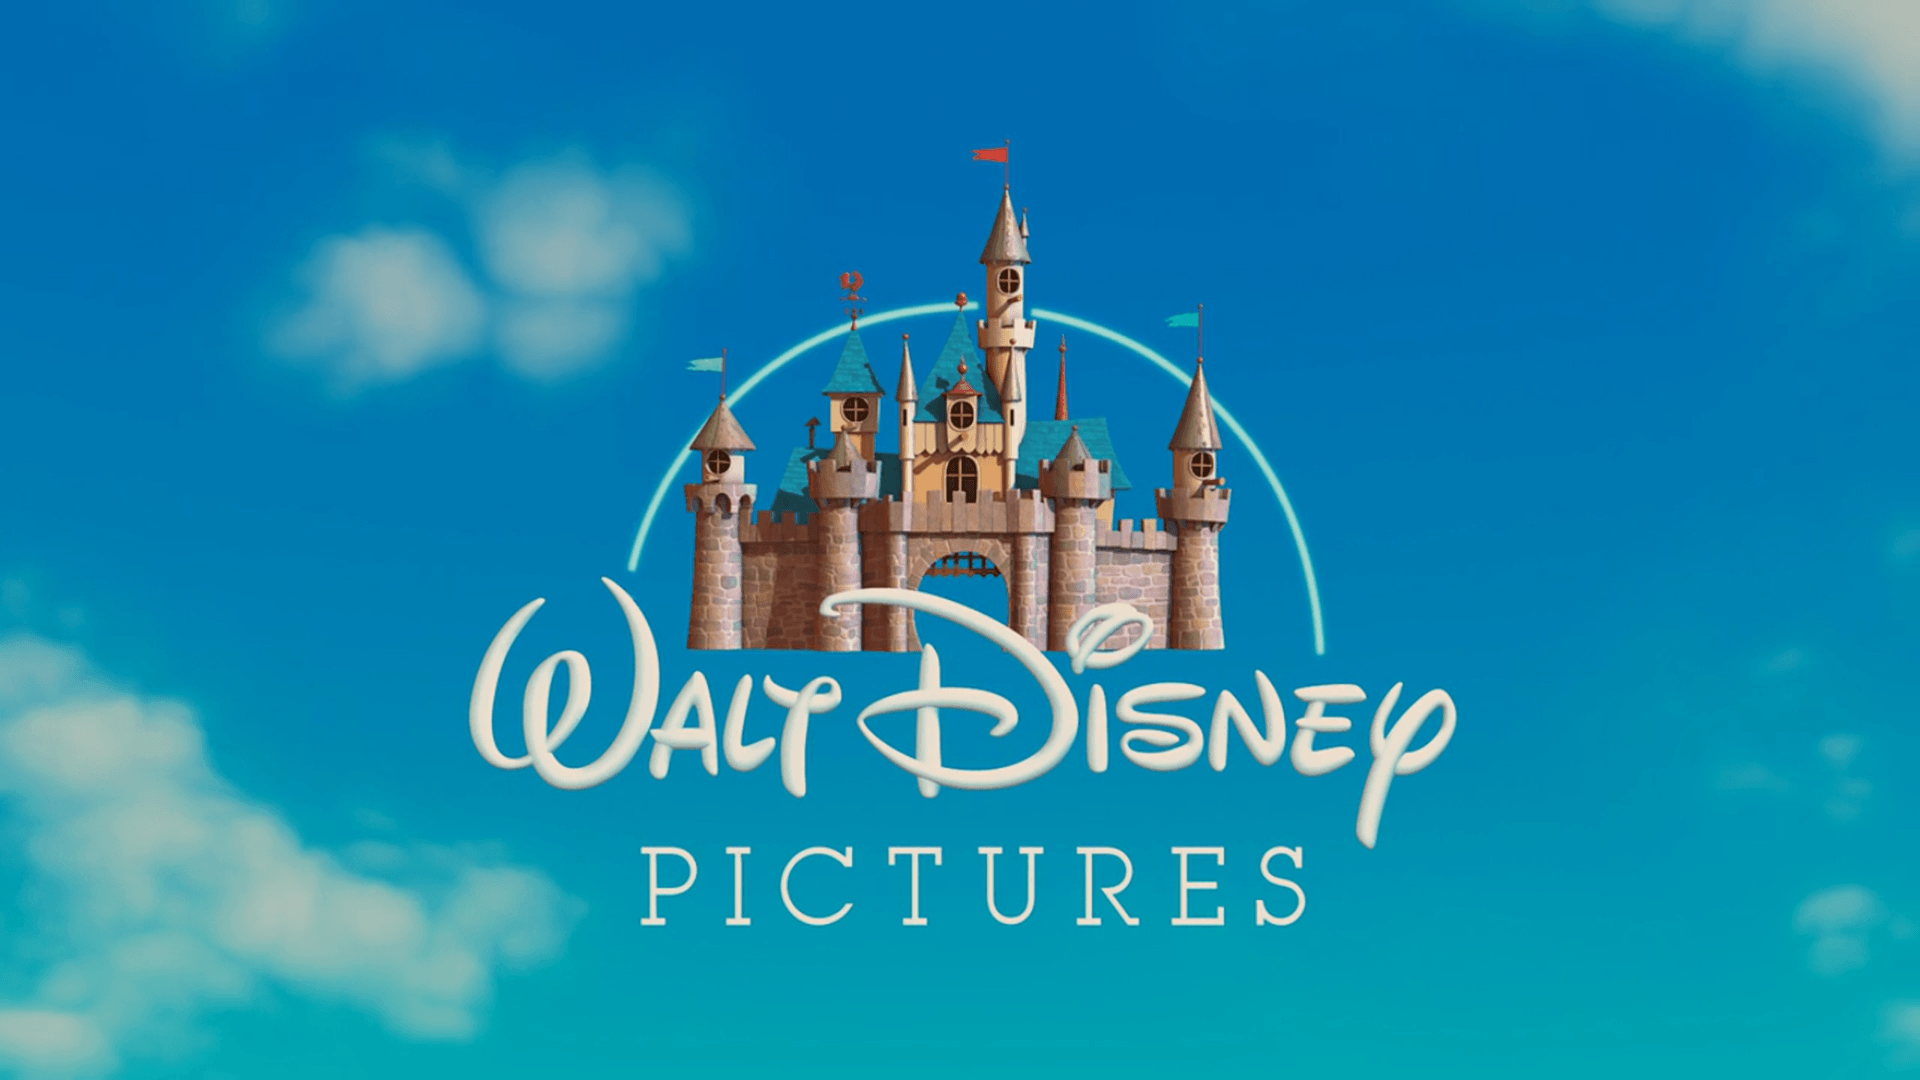 Disney Movie Logo - Walt Disney Picture Logo Evolution